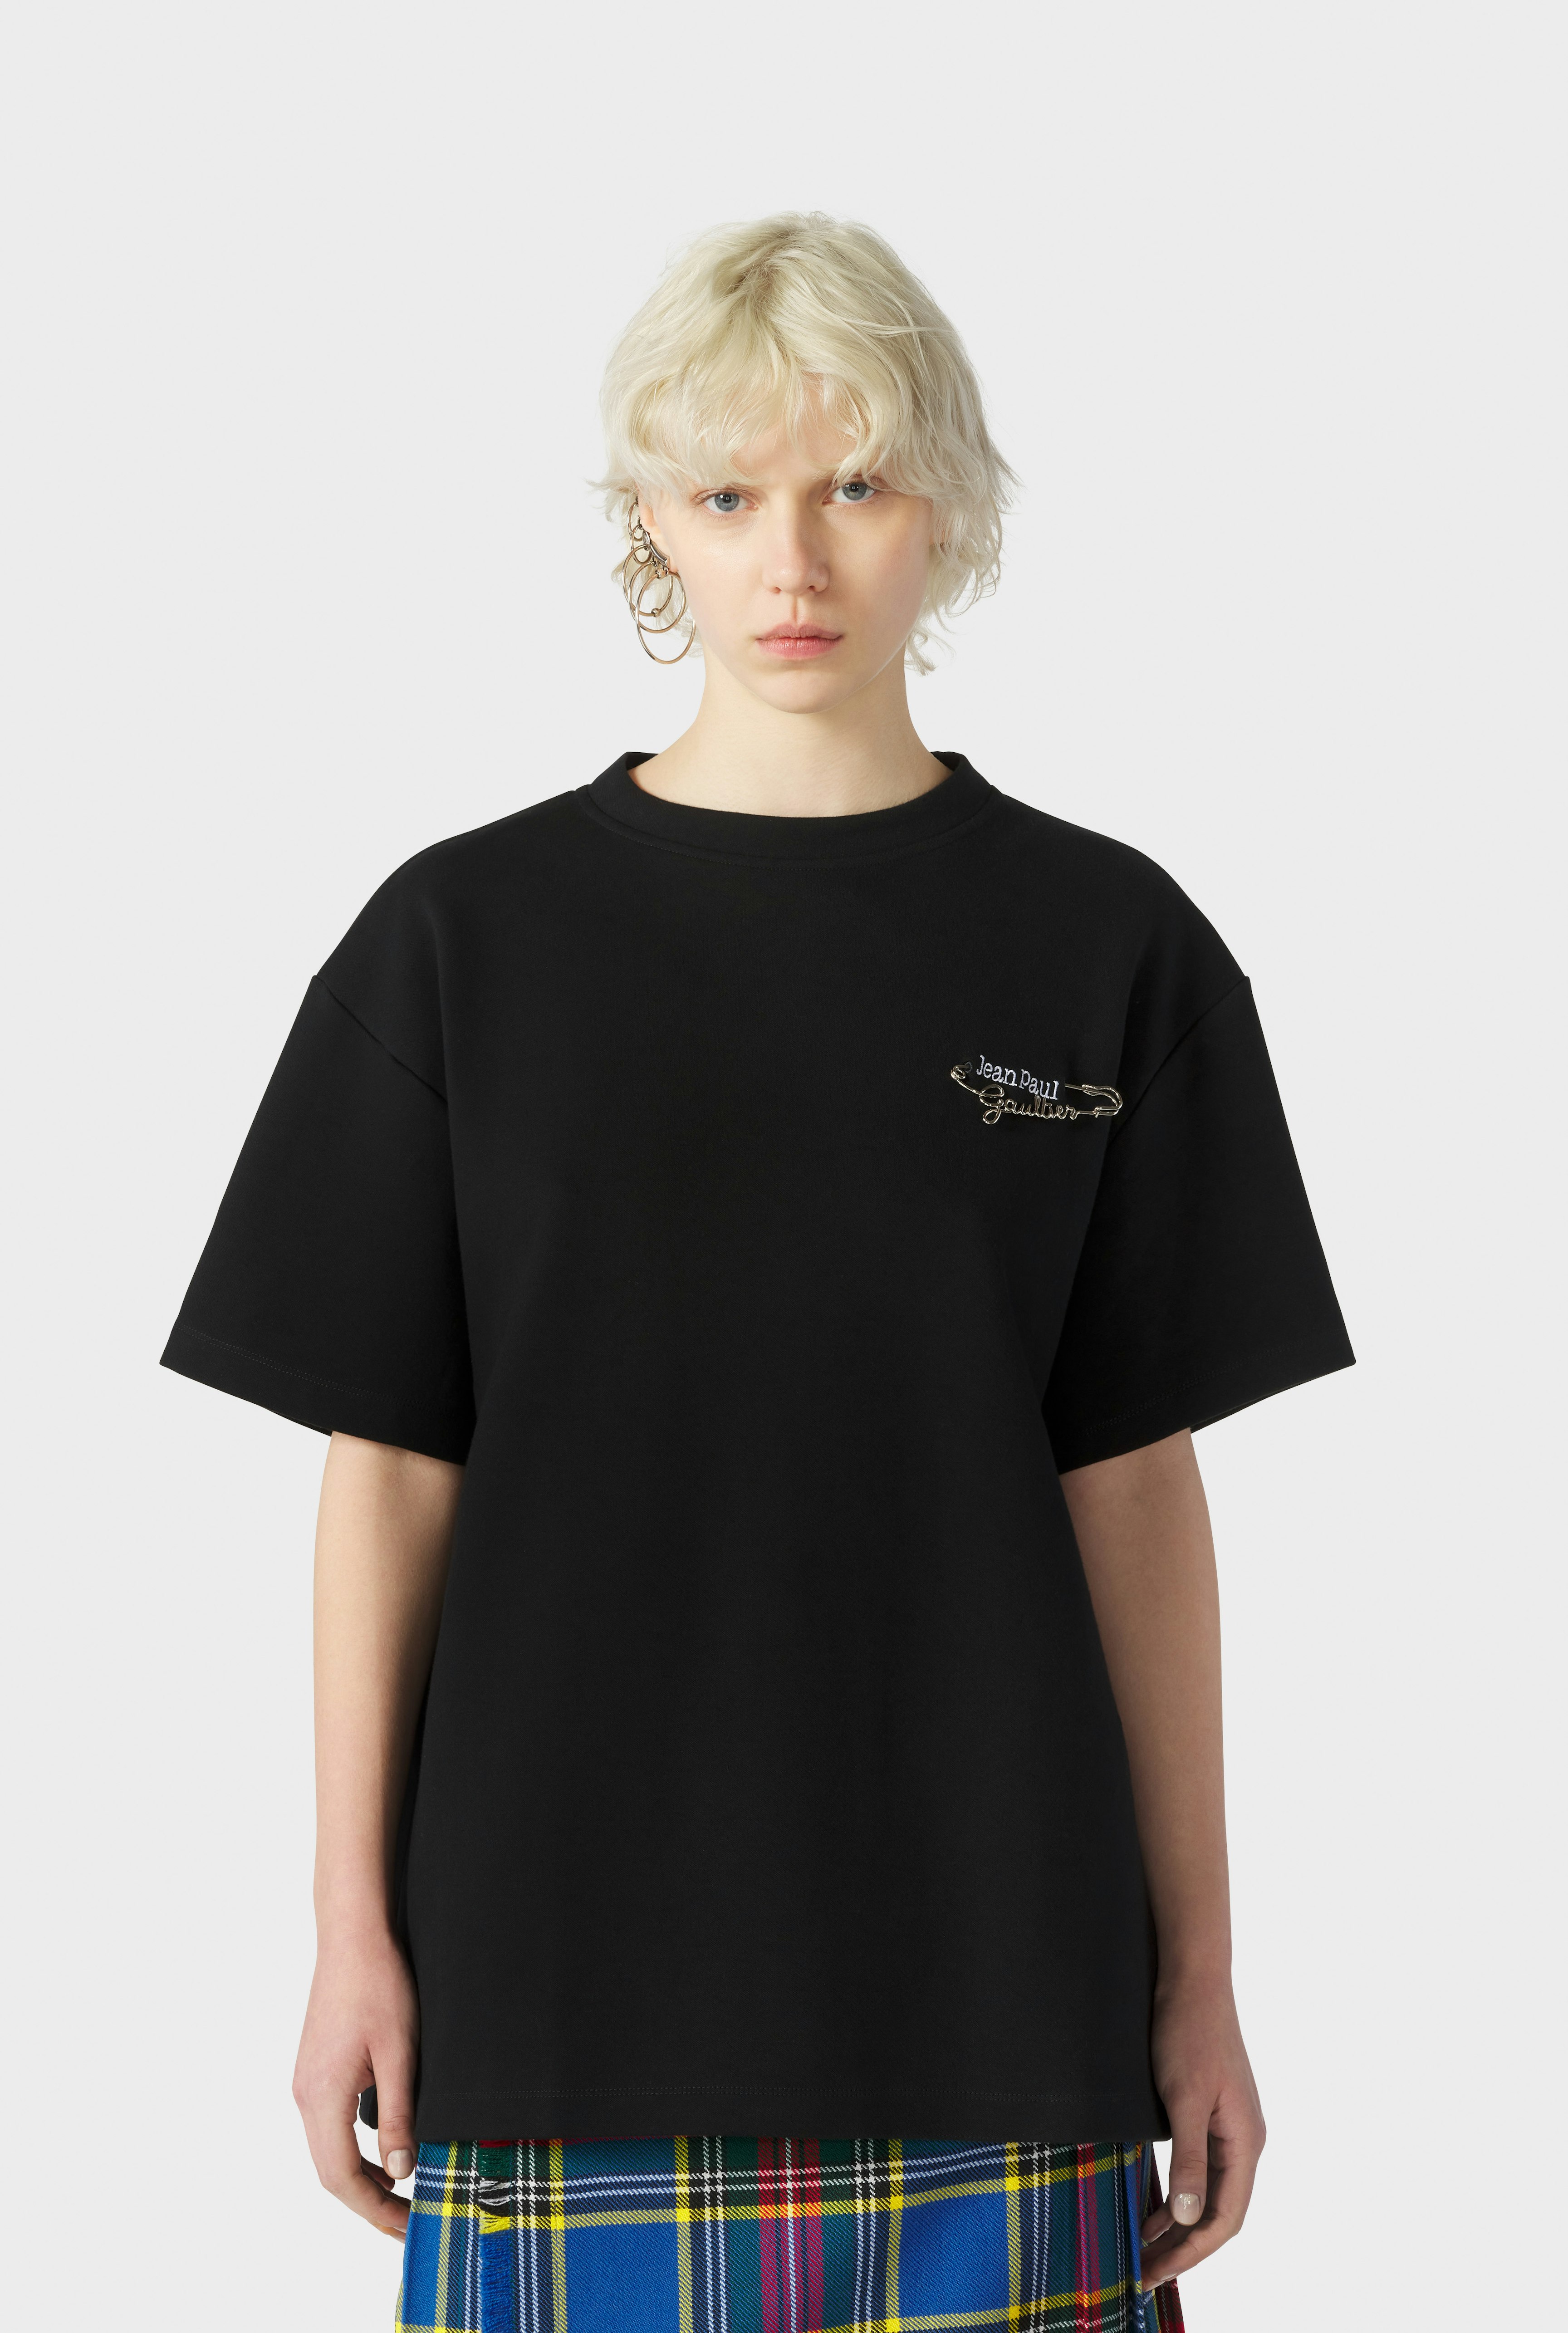 The Black Brooch T-Shirt